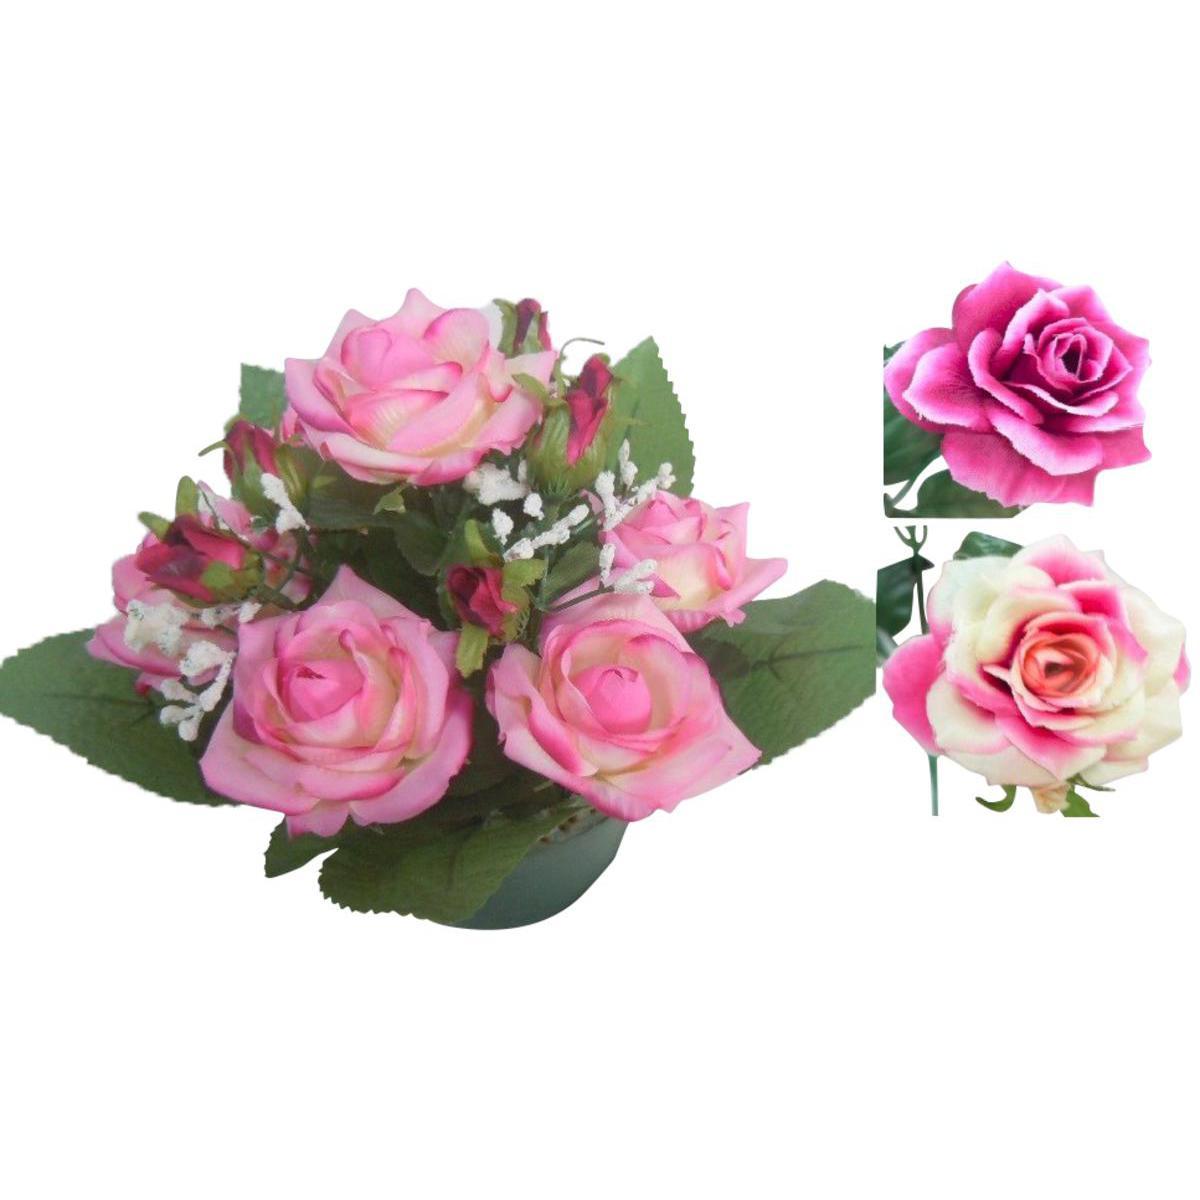 Composition de roses -Plastique, Polyester - Diam 14 x 24 cm - Vert Beige Rose